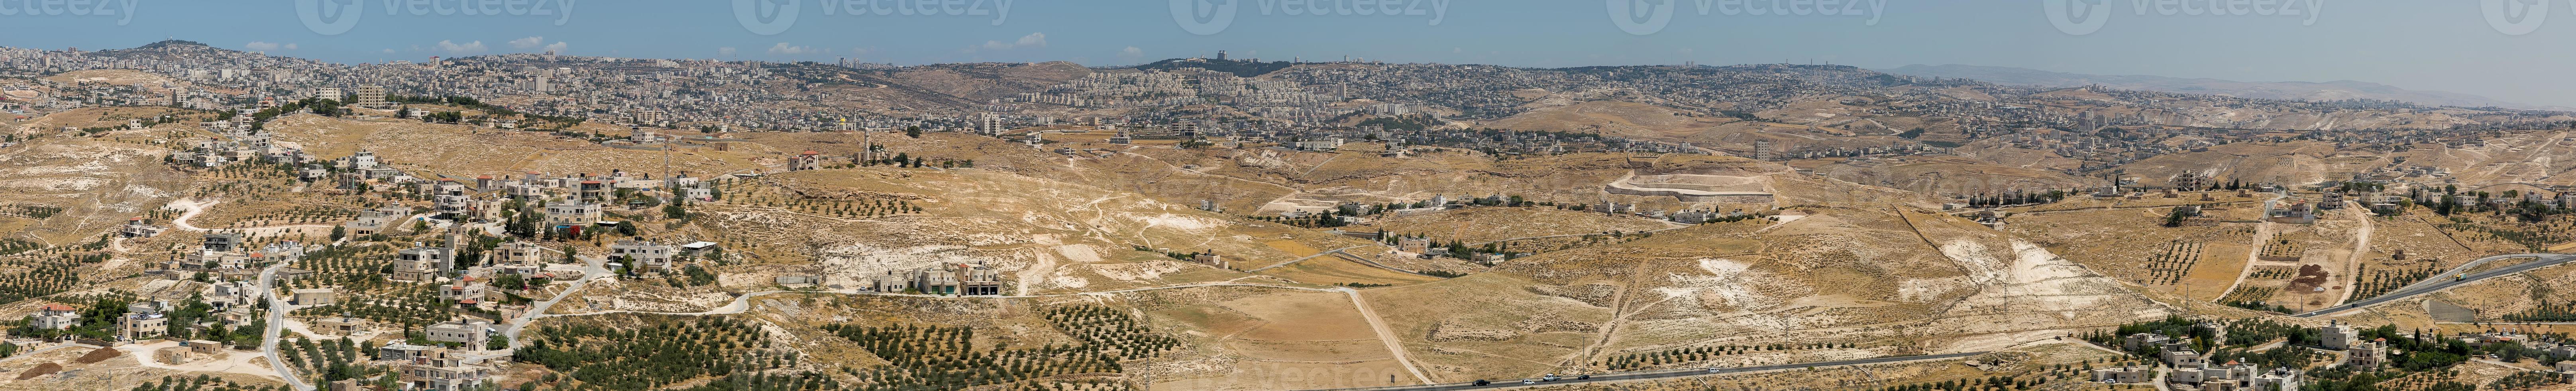 paisaje en israel foto